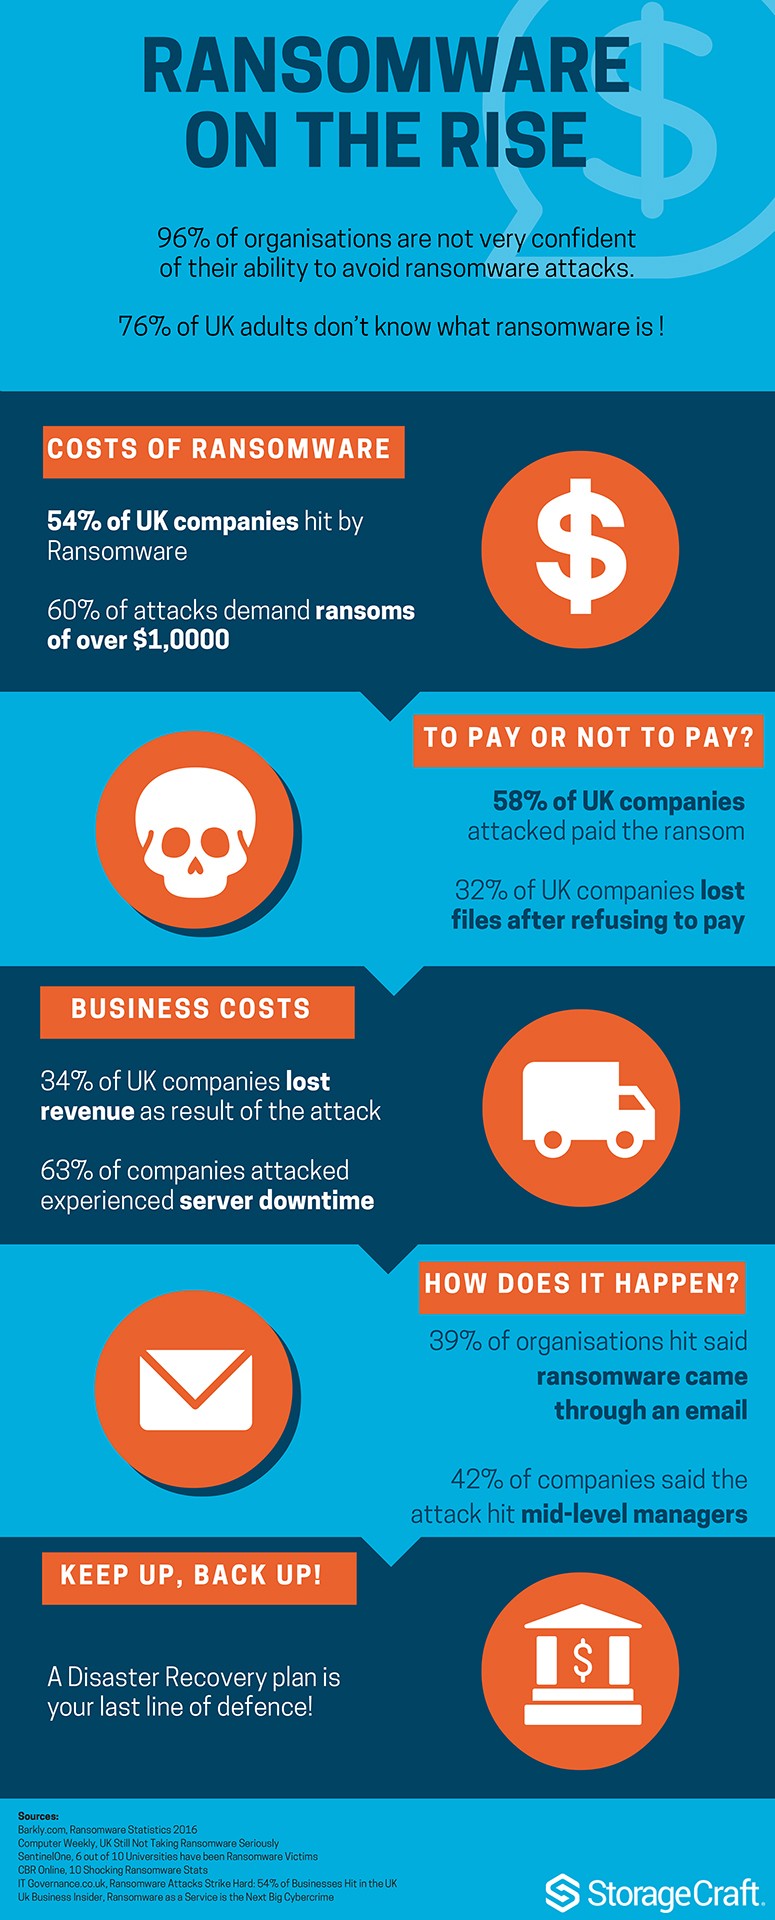 Cybercrime Infographic